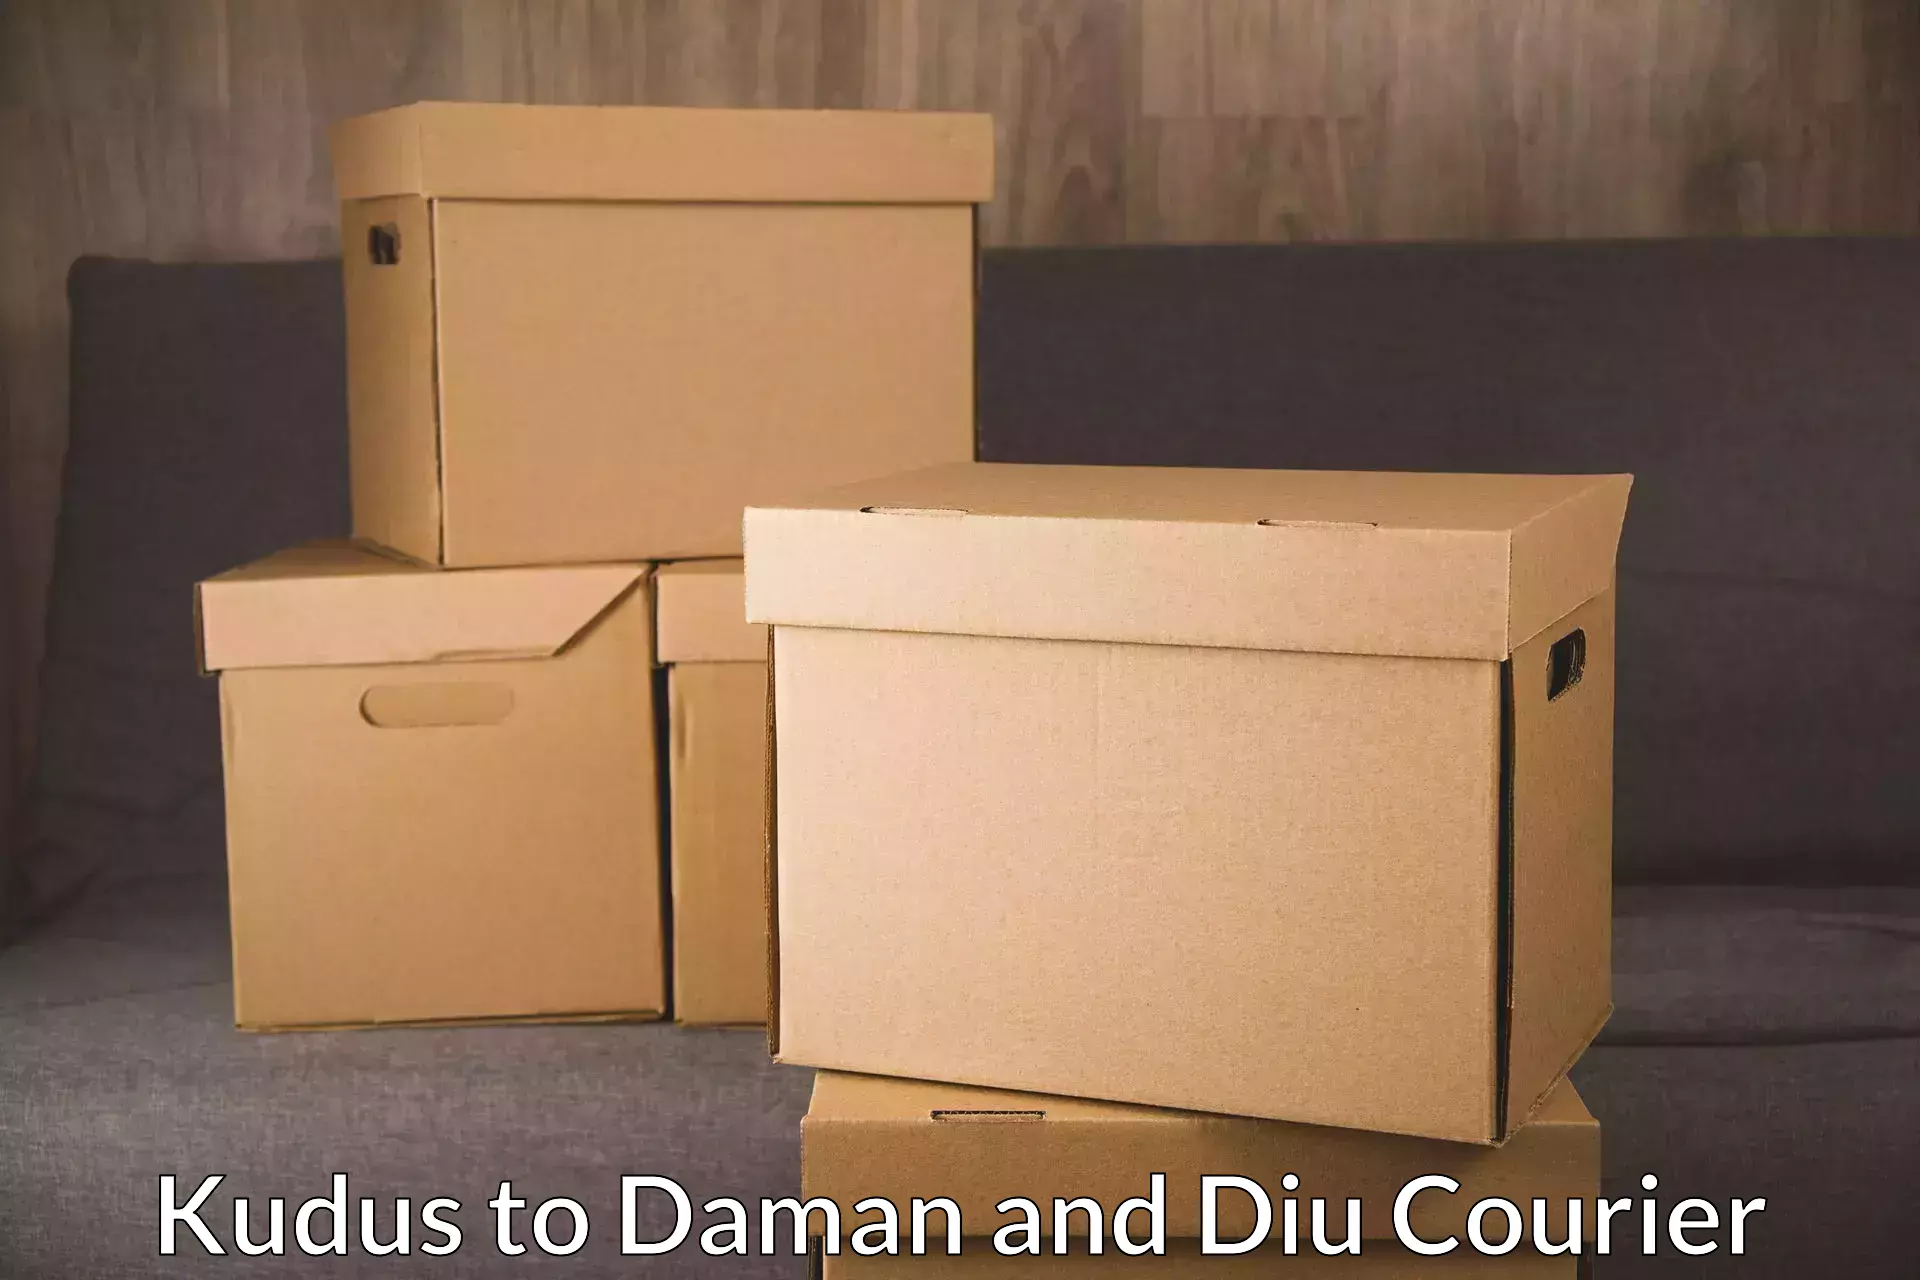 Tracking updates Kudus to Daman and Diu